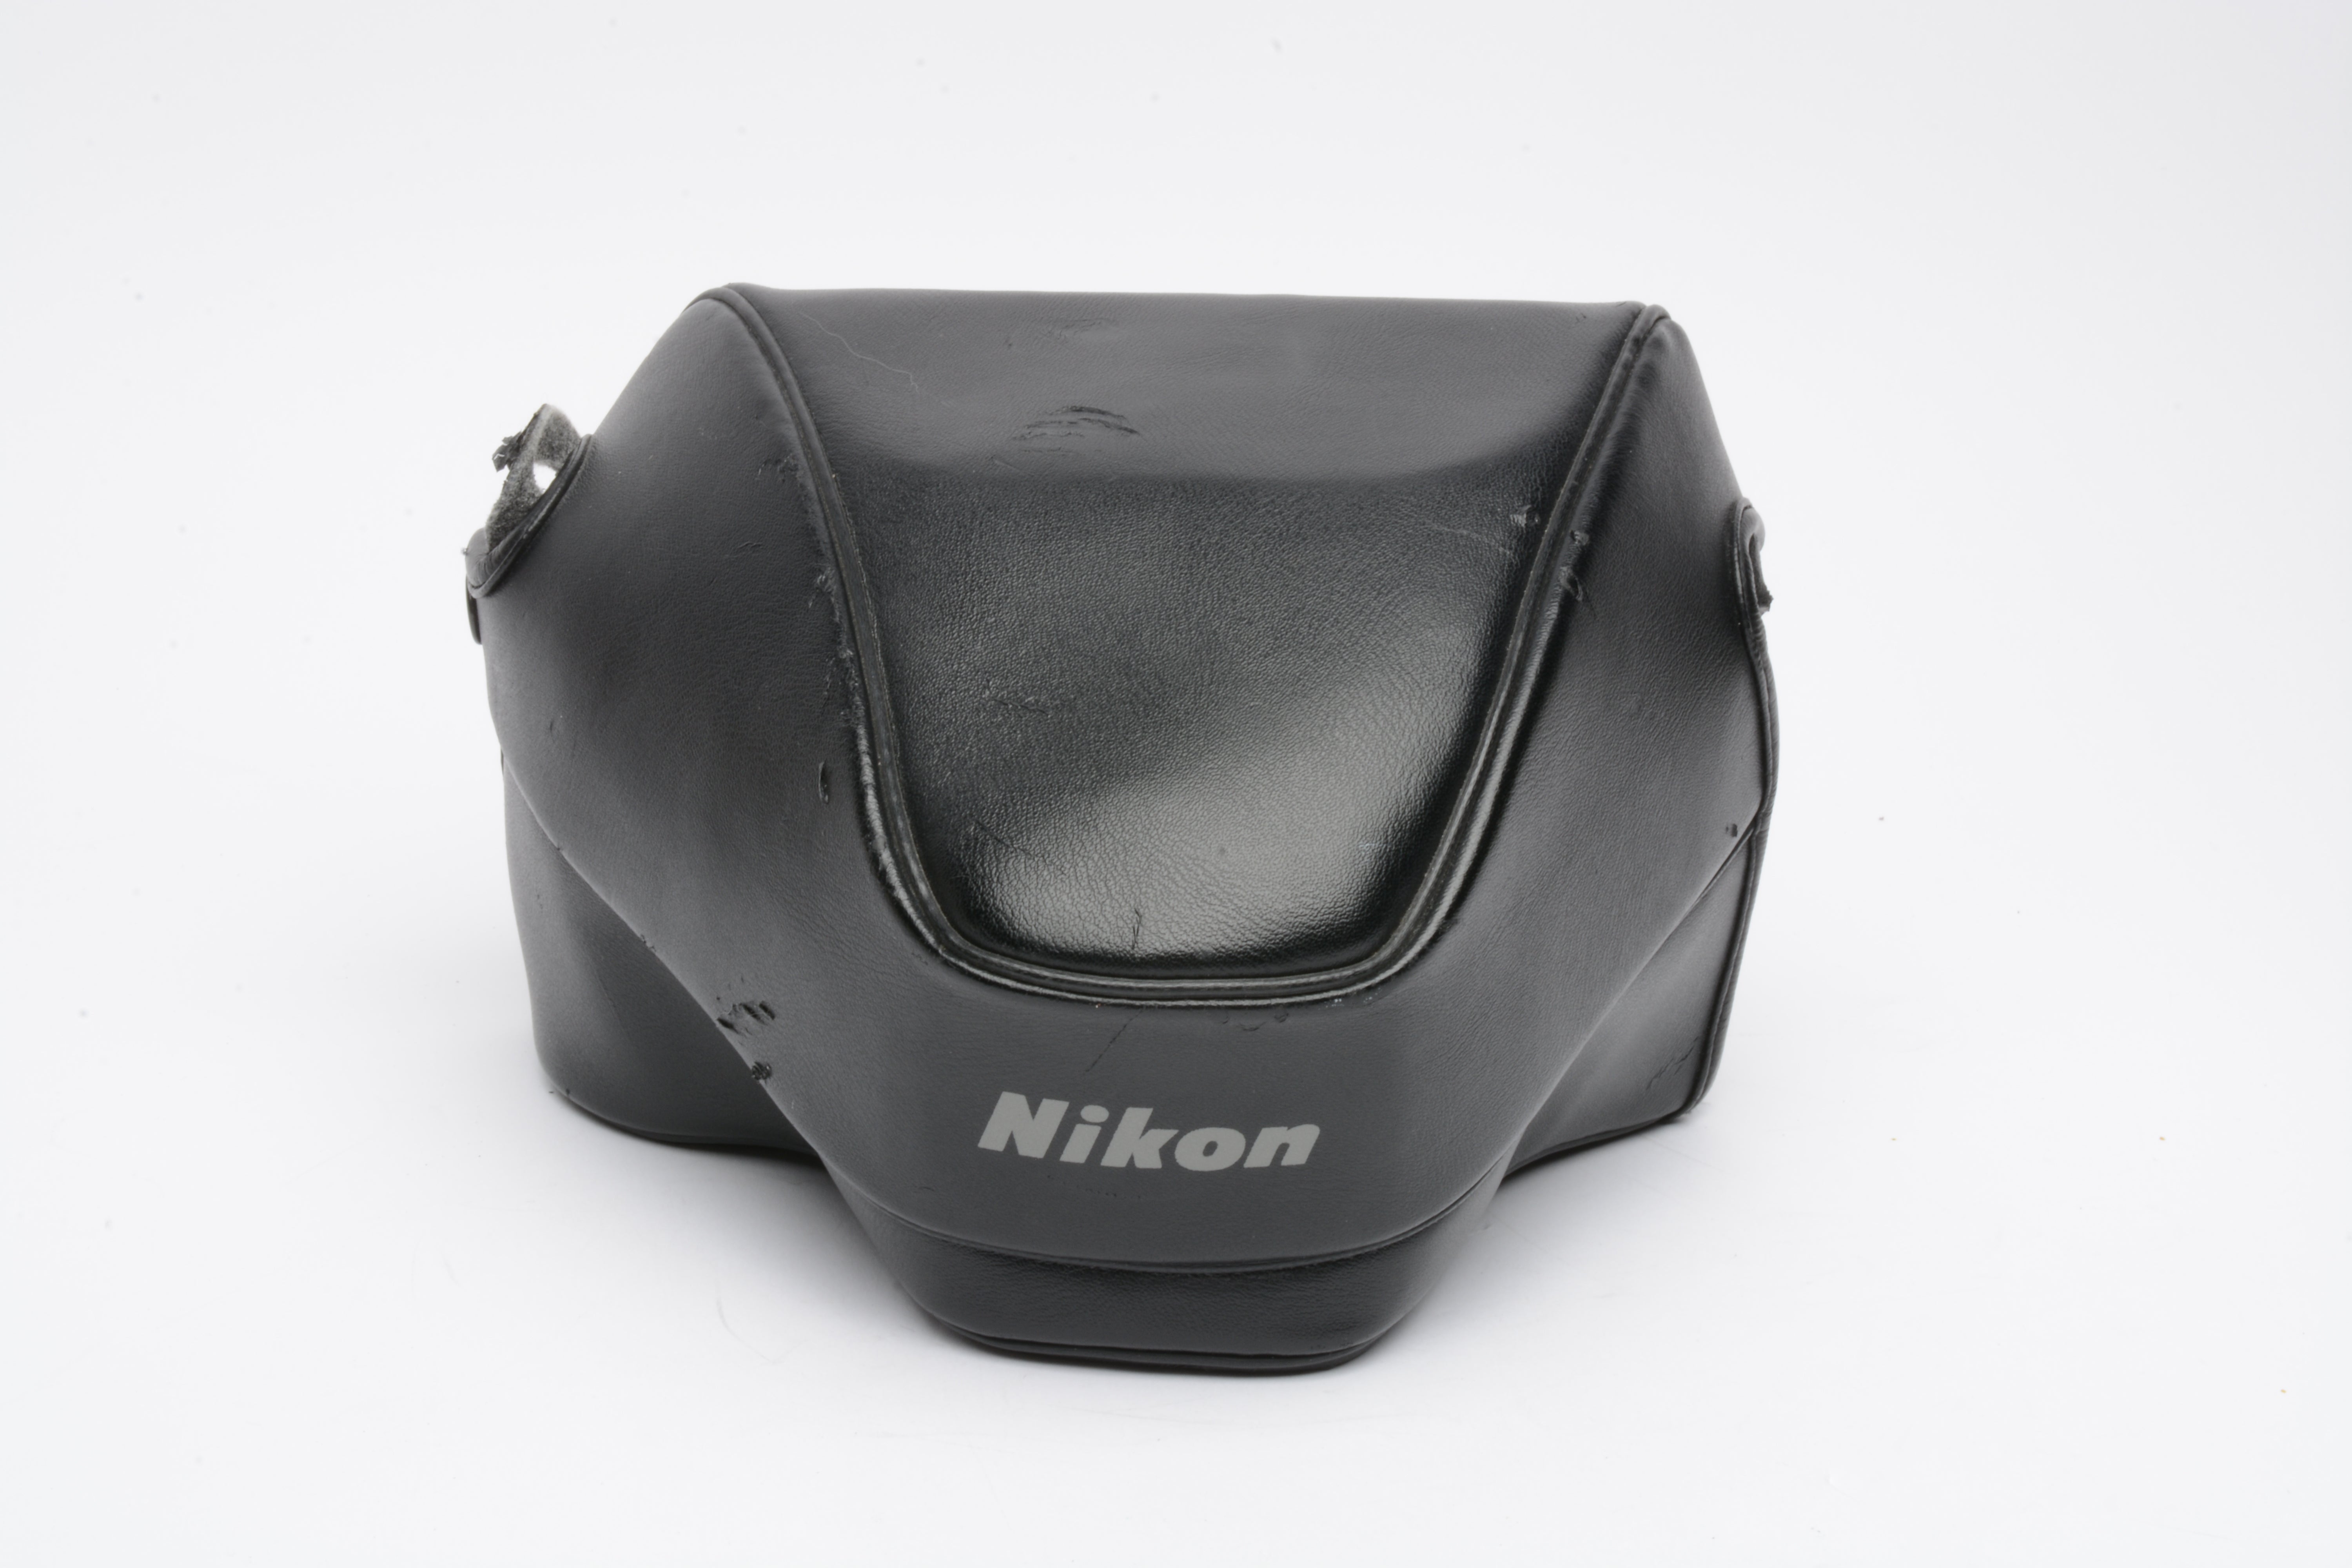 Nikon N4004s 35mm SLR w/Sigma 35-70mm f3.5-4.5 zoom lens